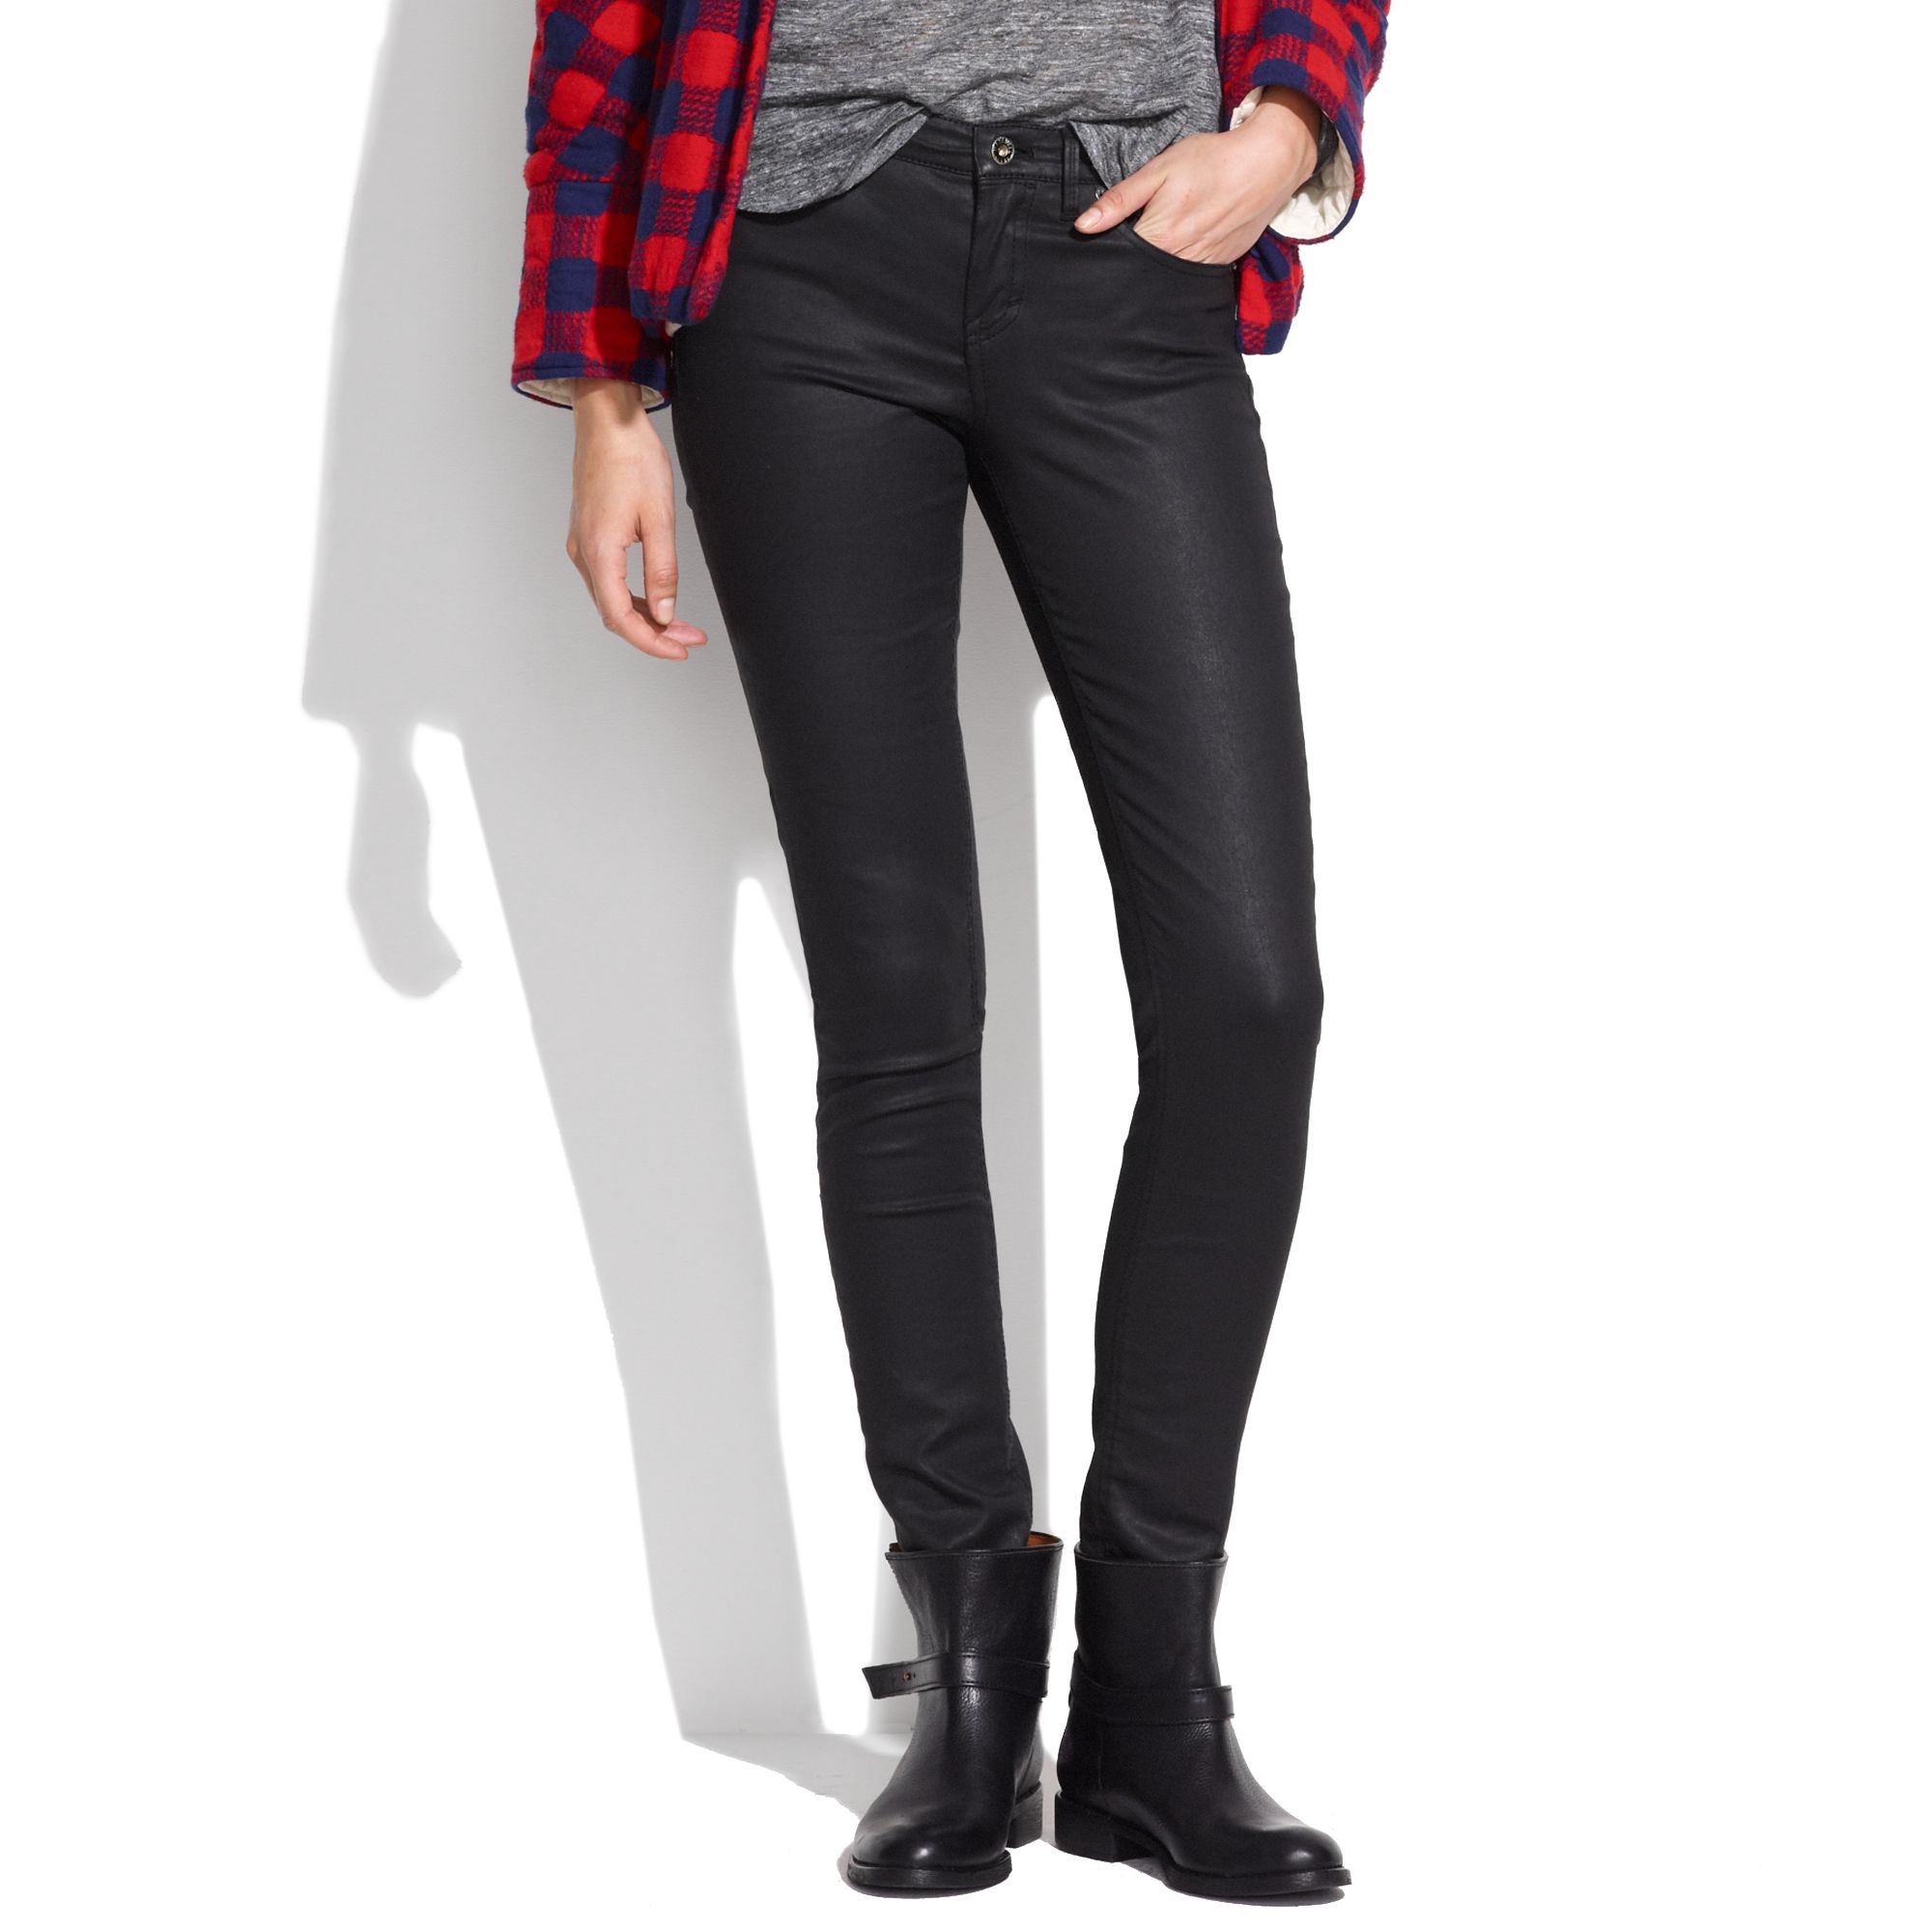 Lyst - Madewell Skinny Skinny Coated Jeans in Black